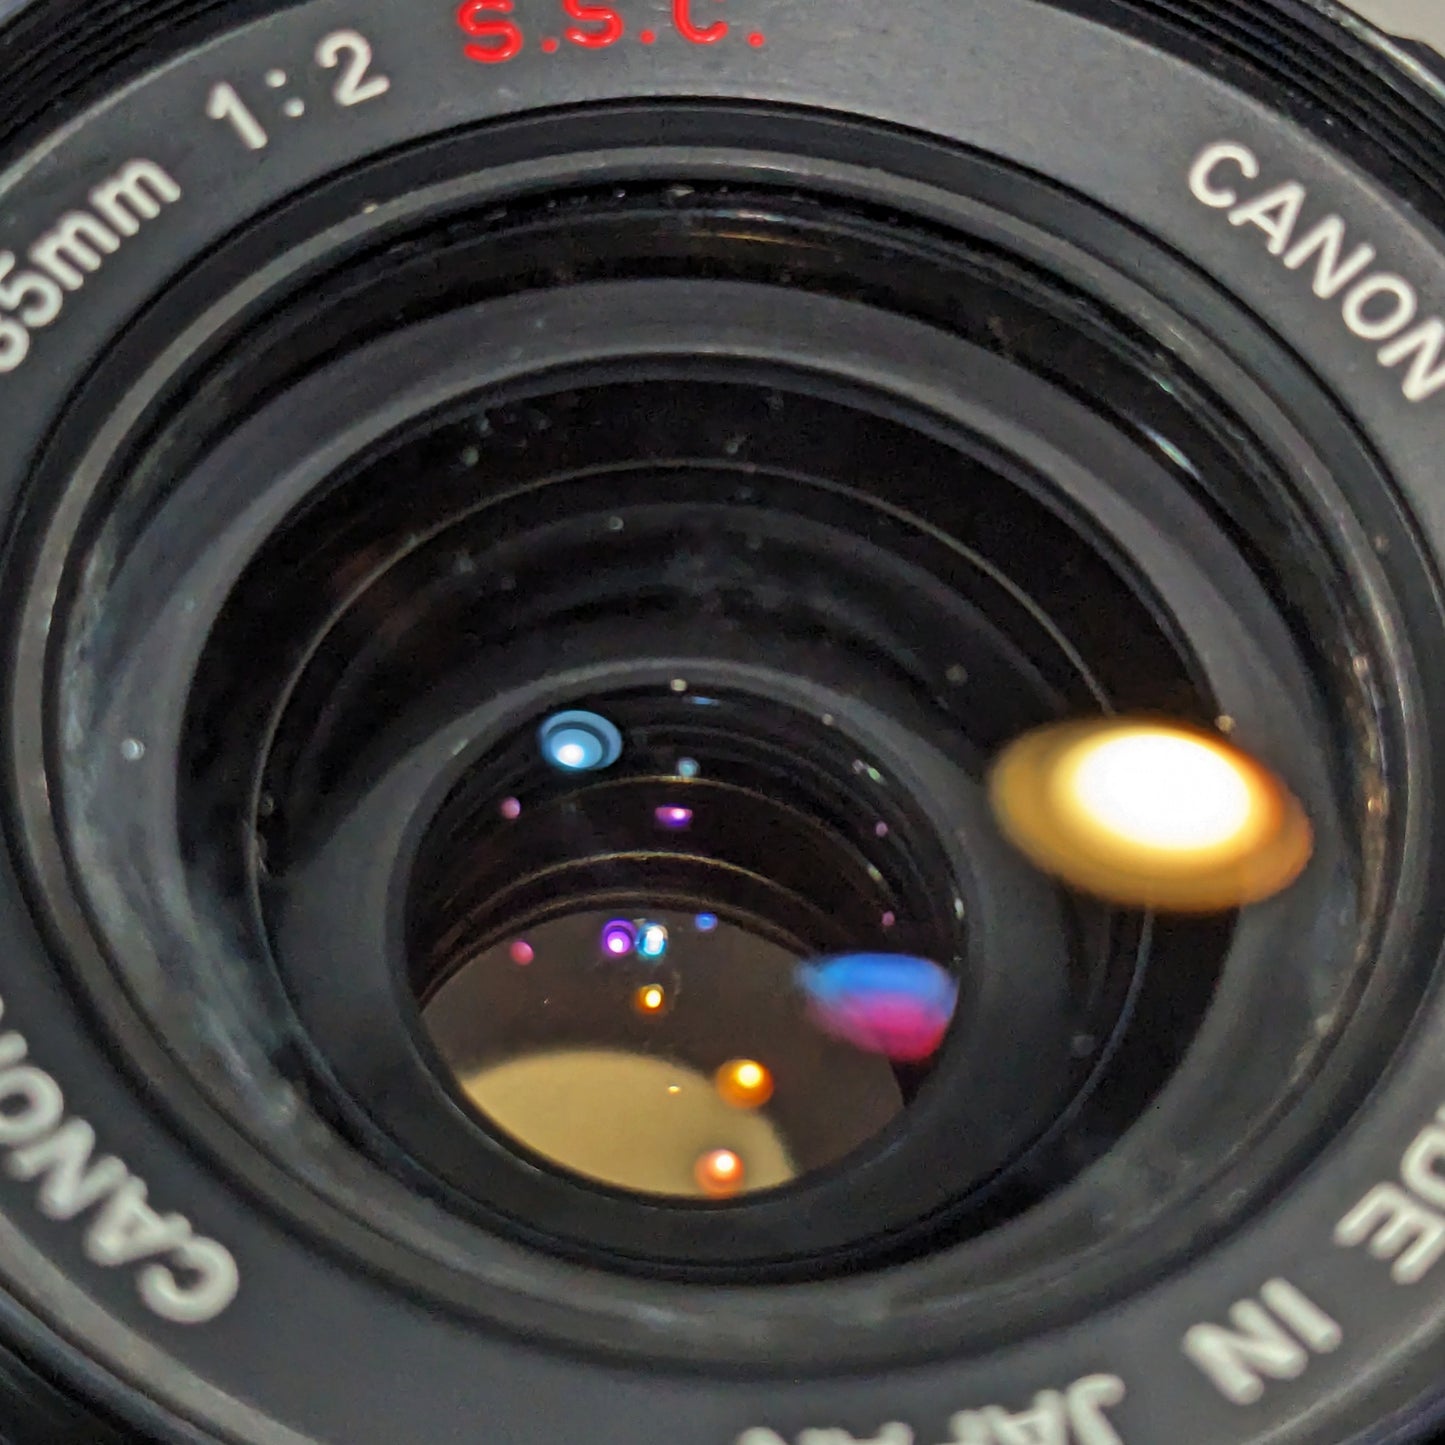 Canon FD 35mm F2 Concave "O" Lens